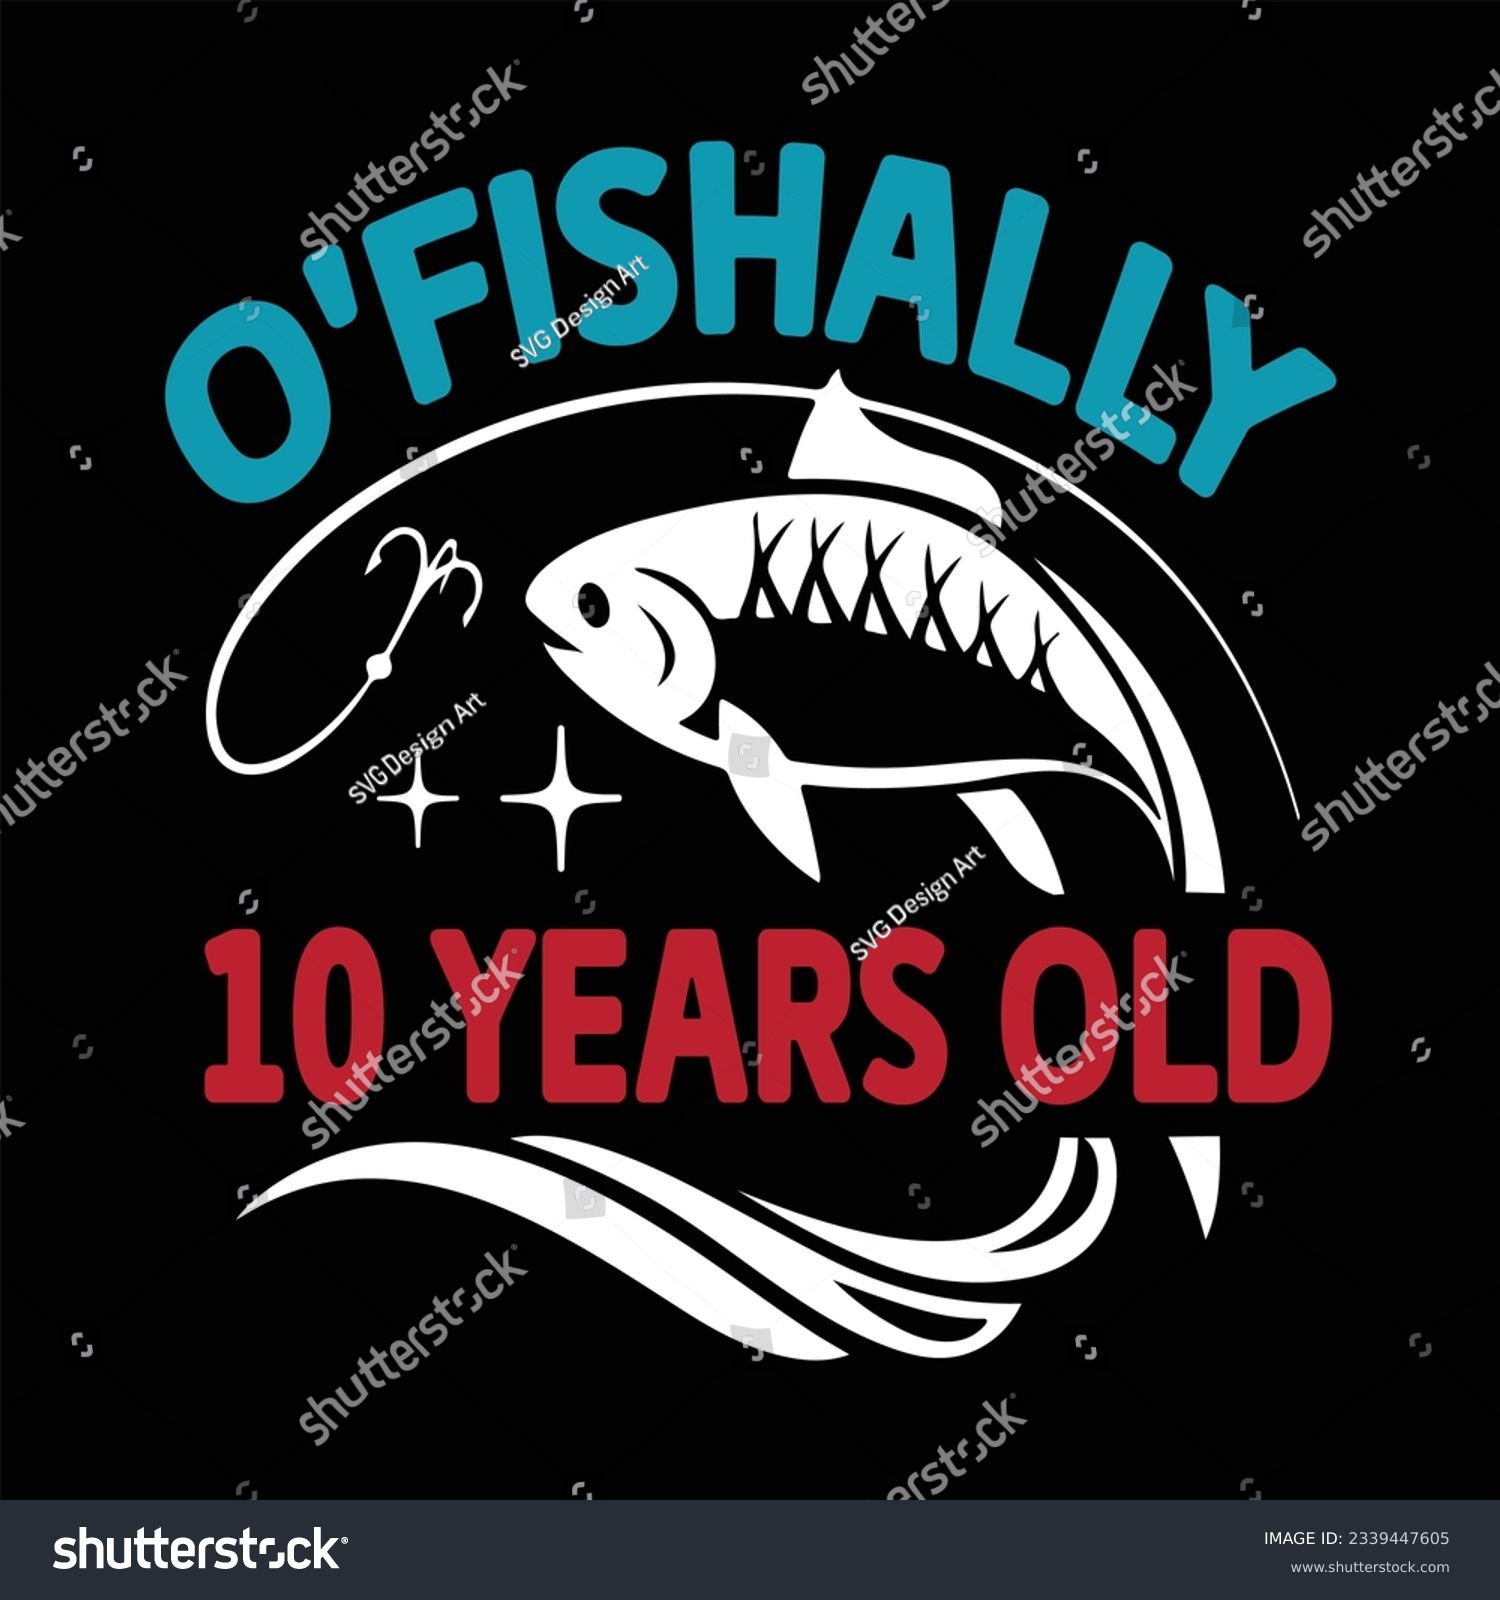 SVG of O'Fishally 10 Years Old Funny Birthday svg svg